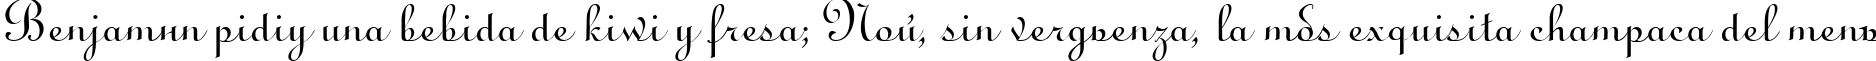 Пример написания шрифтом Linus текста на испанском